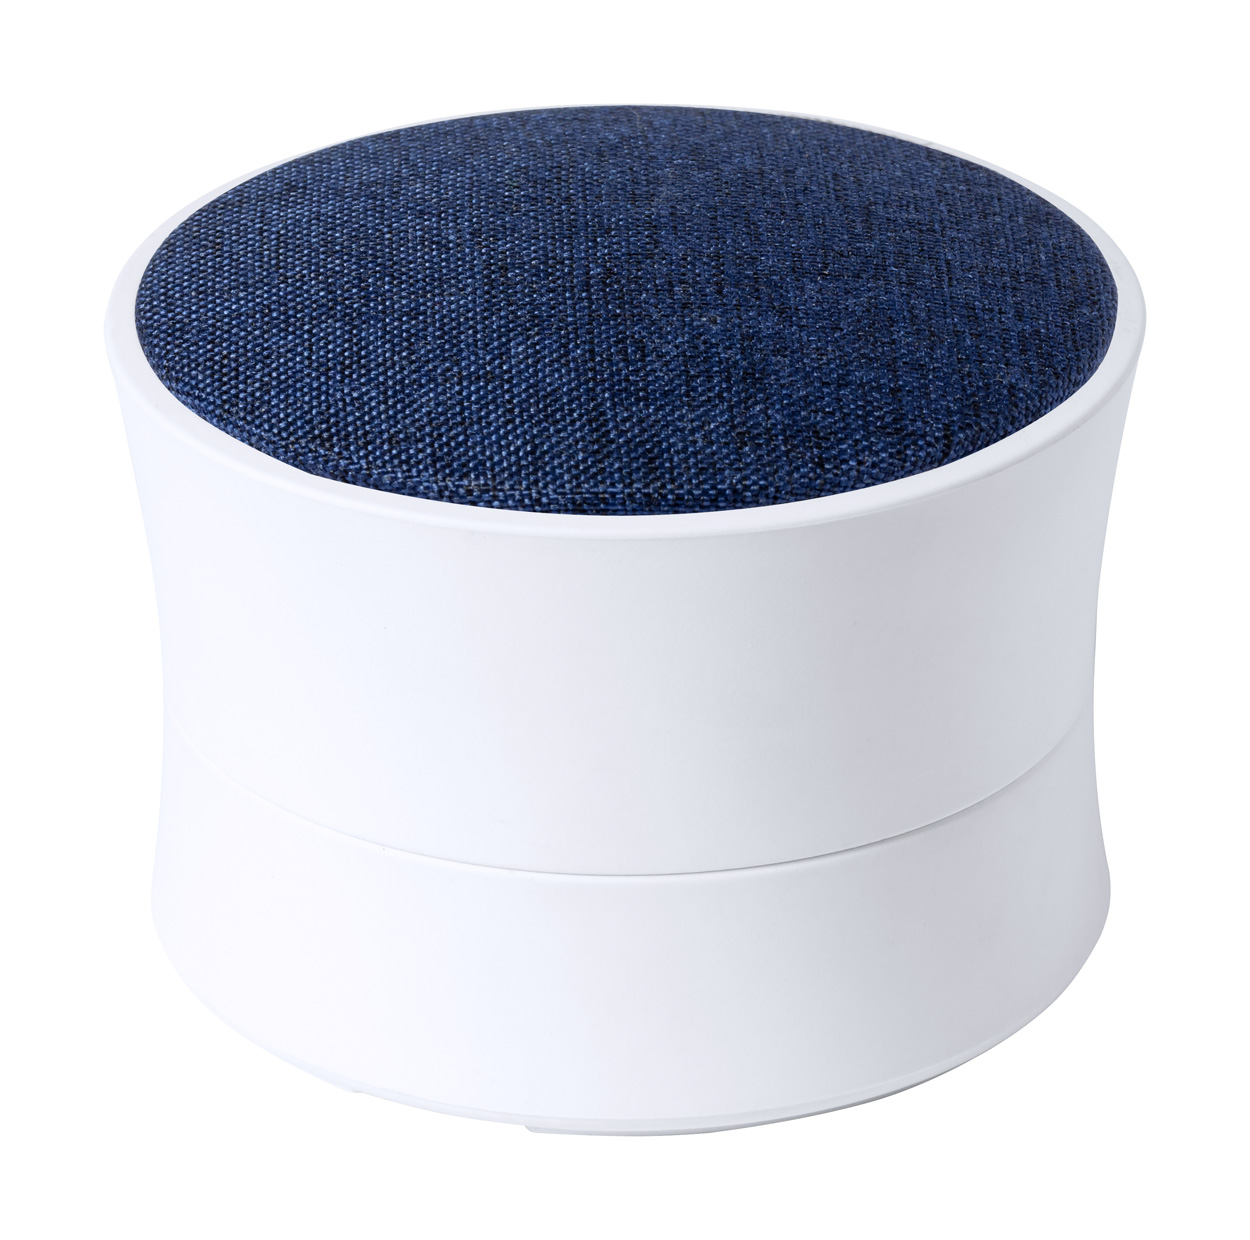 Rumok bluetooth speaker - blue